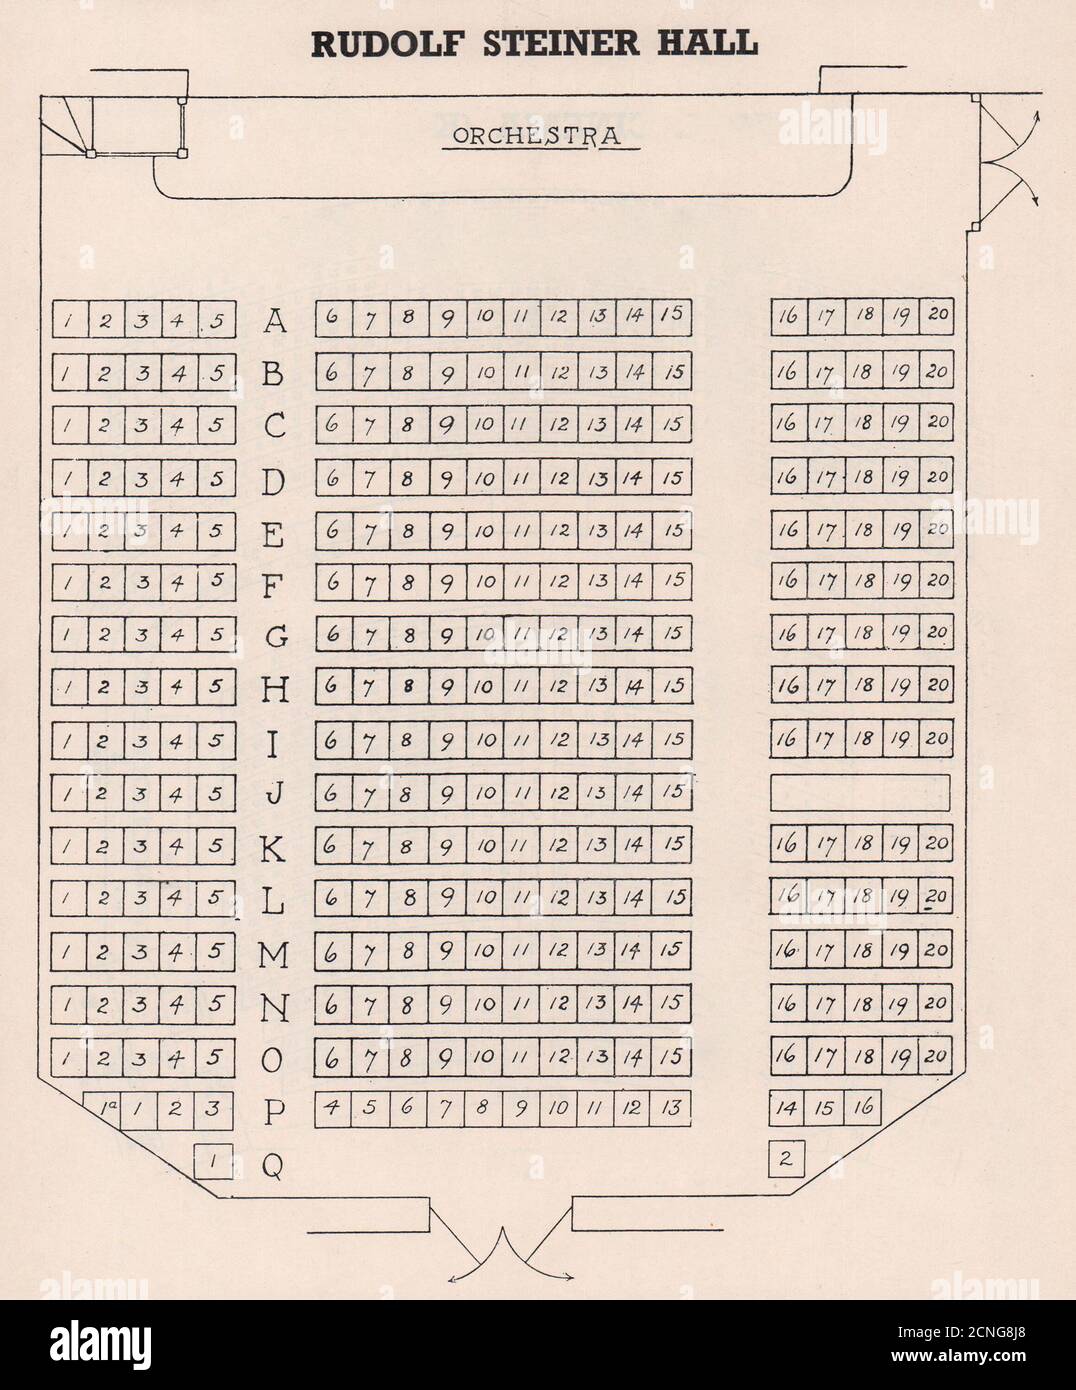 RUDOLF STEINER HALL/THEATRE, plan de sièges vintage. Park Road, Marylebone 1937 Banque D'Images